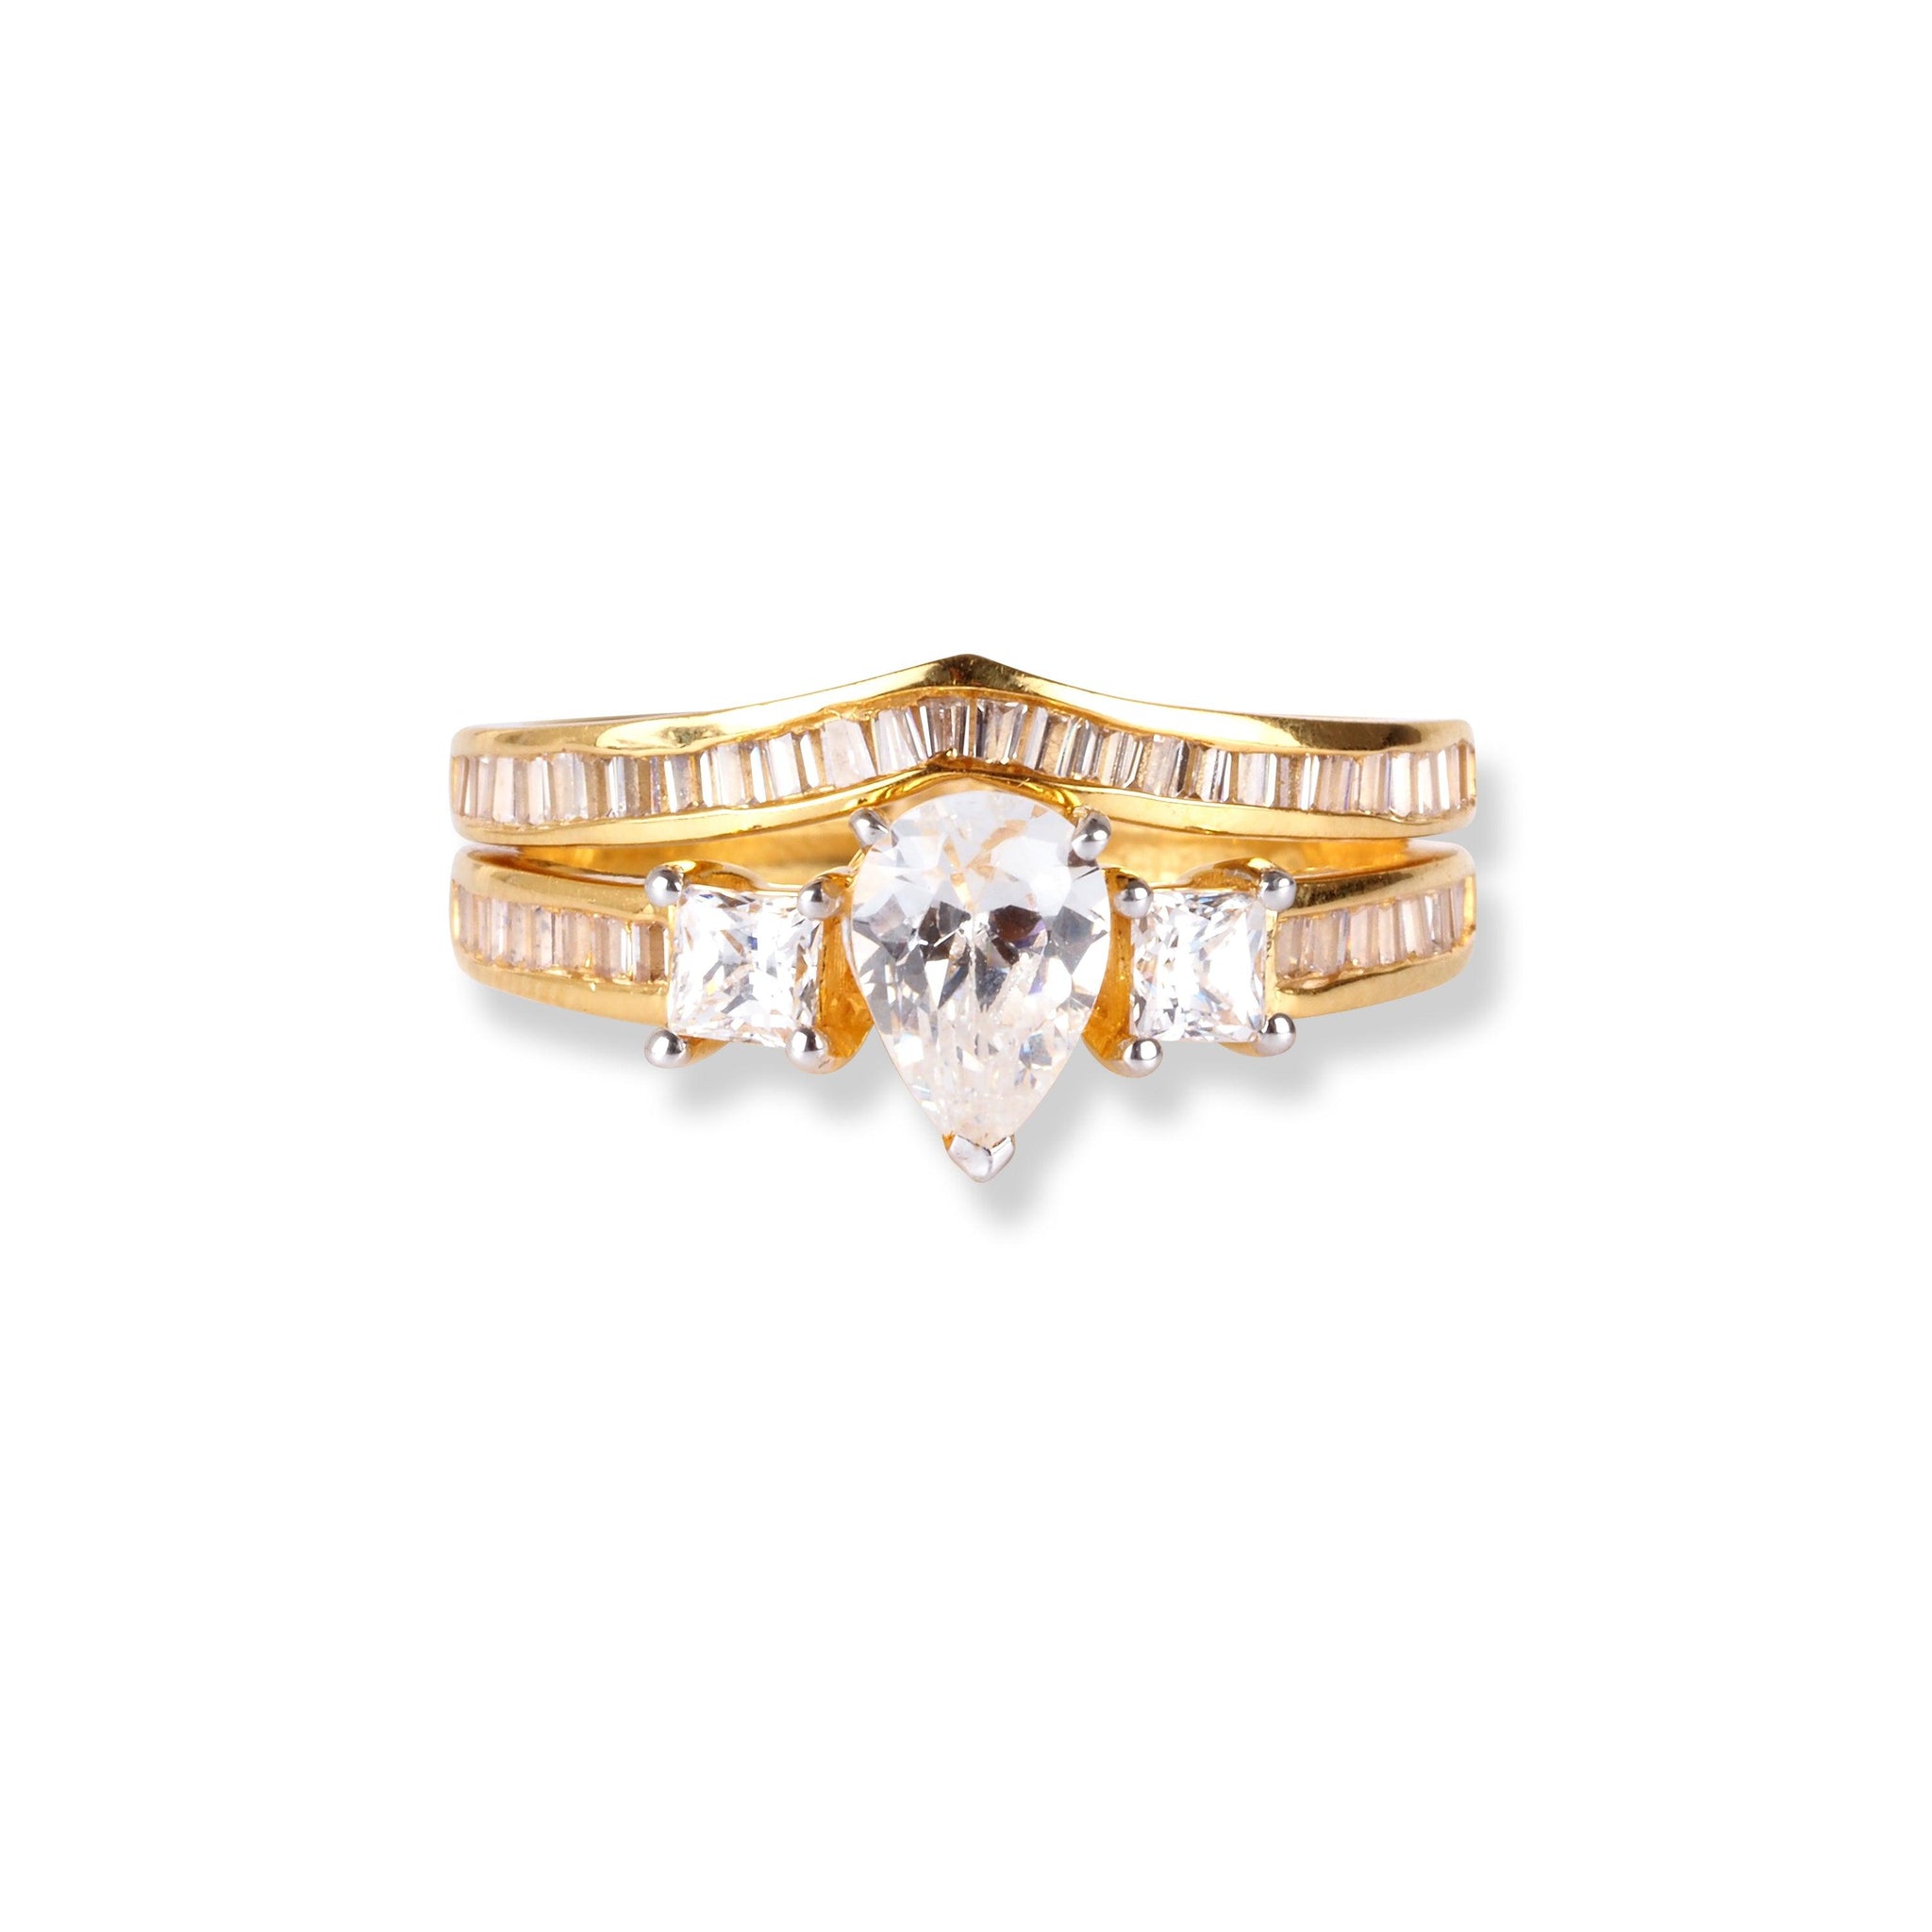 22ct Gold Engagement Ring and Wedding Band Set with Swarovski Zirconia Stones LR-6633